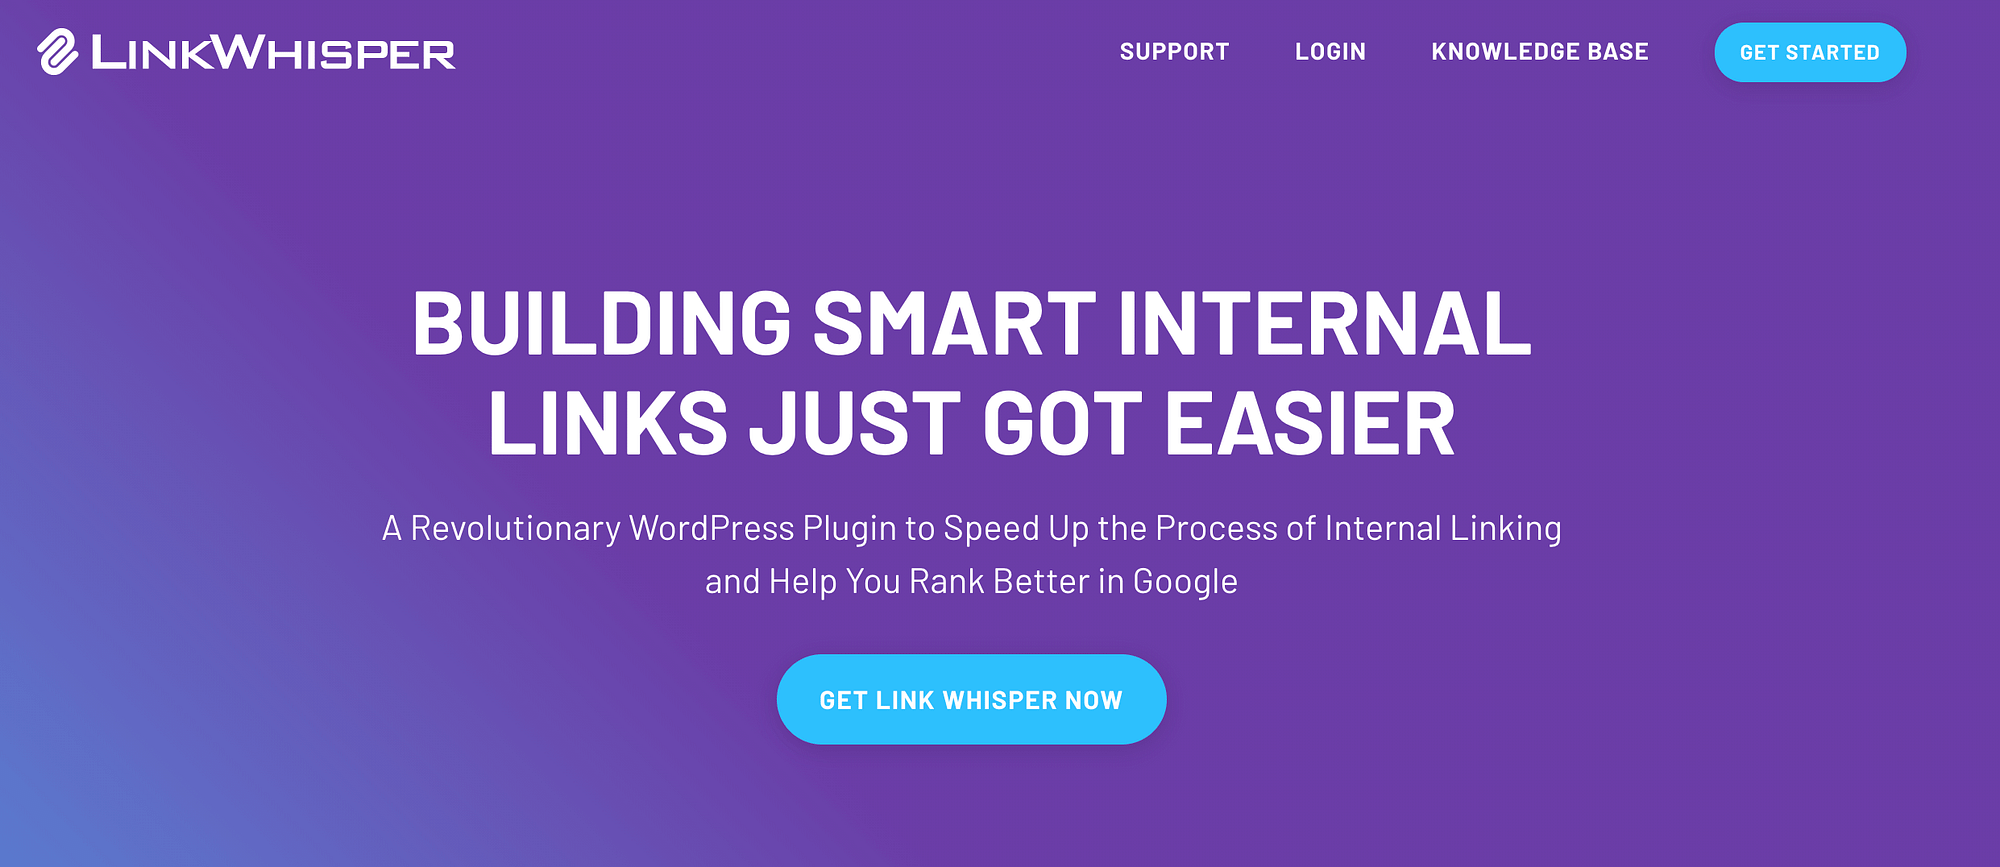 LinkWhisperer 可以幫助您創建企業 WordPress 網站。 